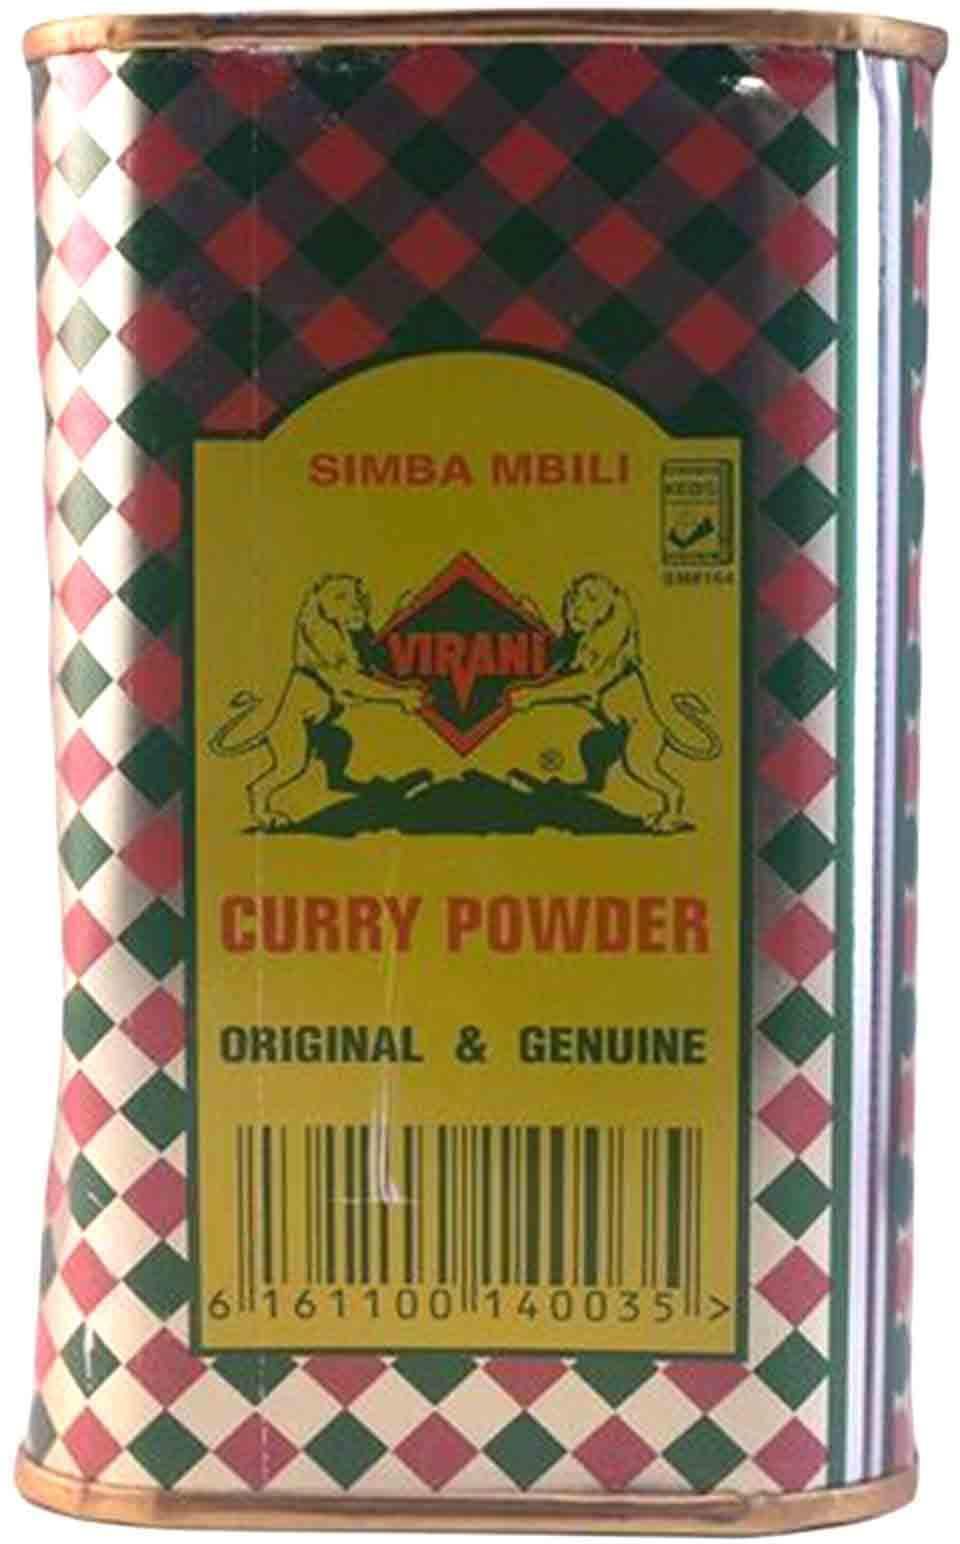 Simba Mbili Curry Powder 200g